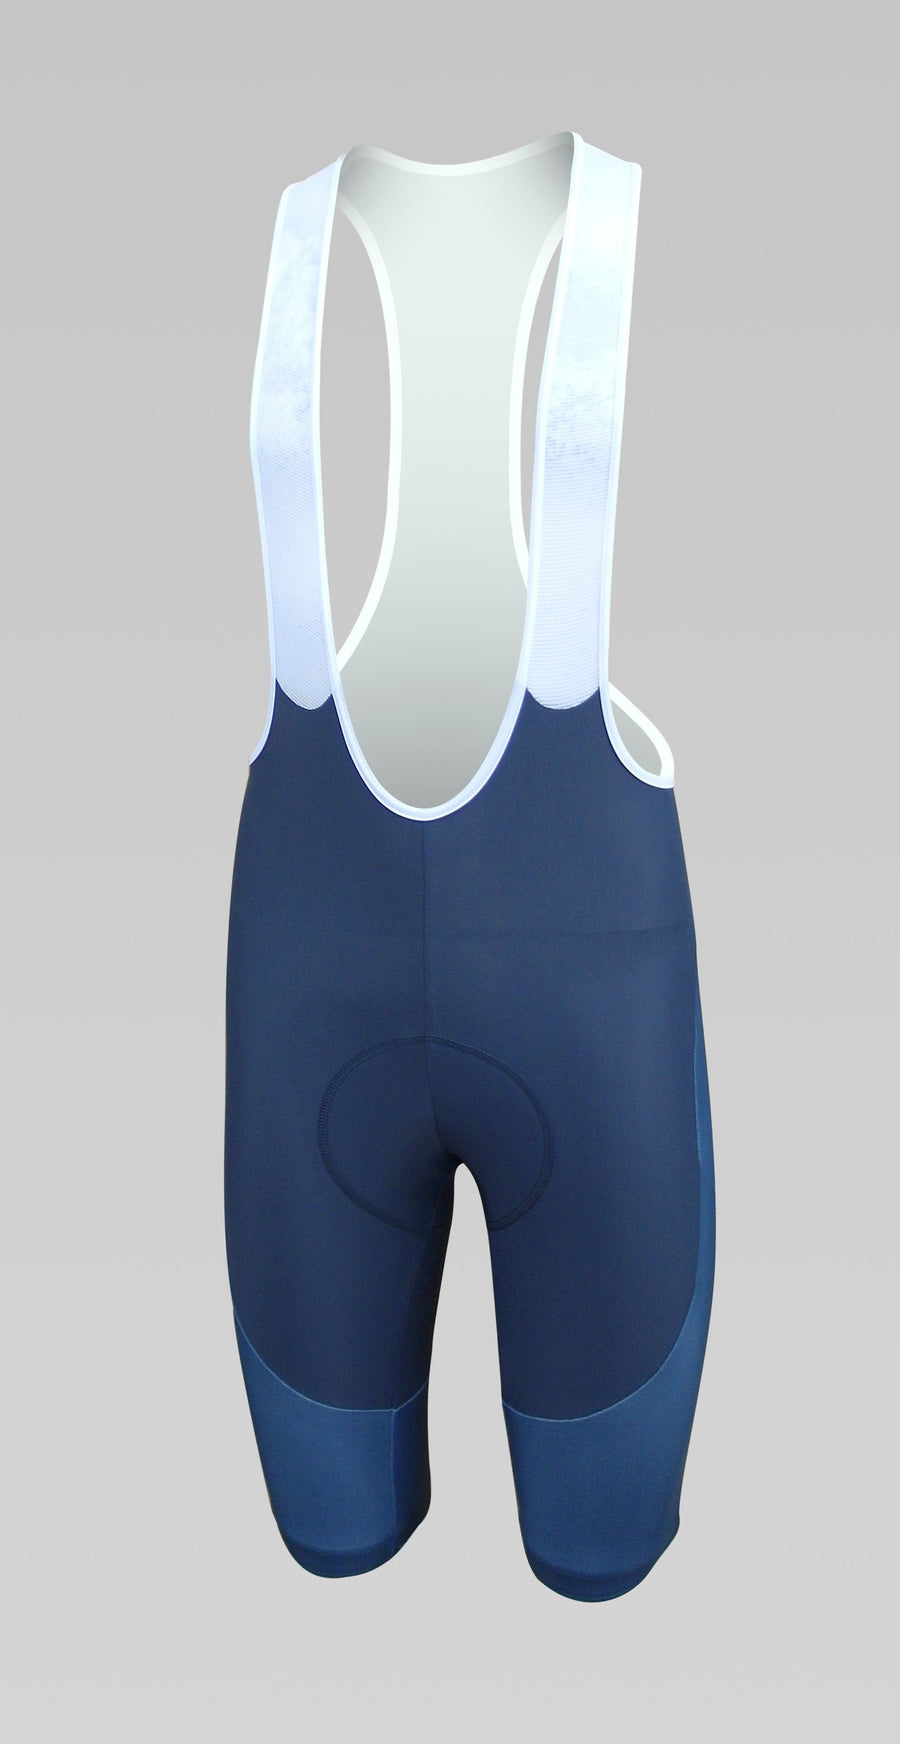 Tech Bib Short-Bib Shorts-custom-design-athletic-sports-champ-sys-uk-champion-system